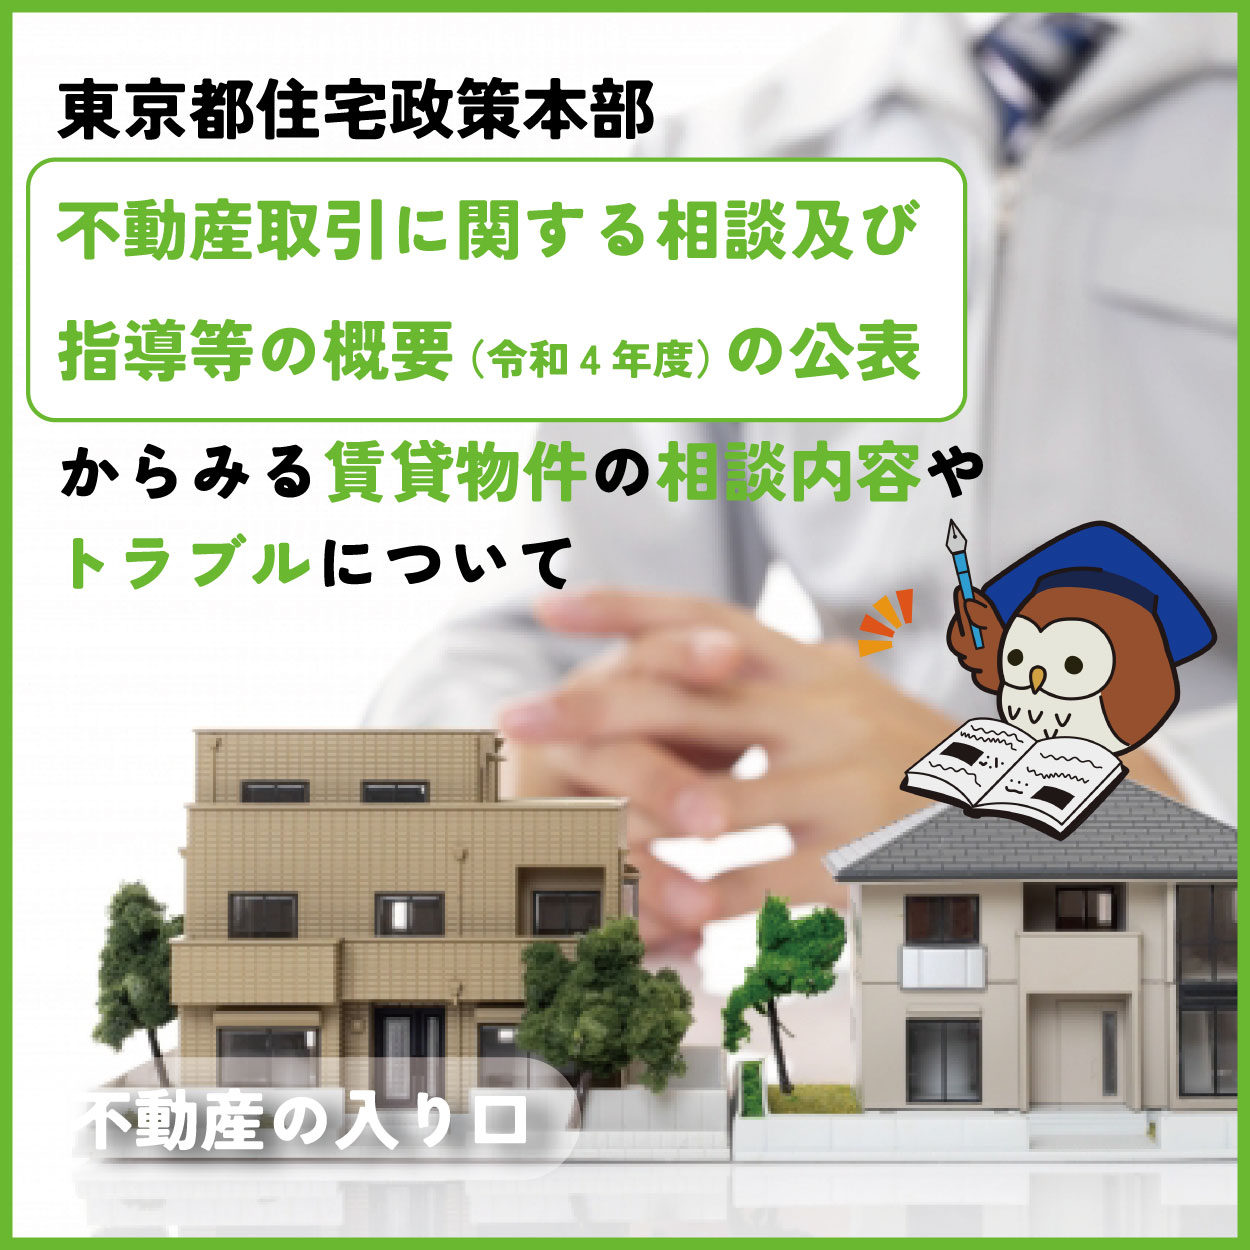 東京都・ 住宅政策本部「不動産取引に関する...